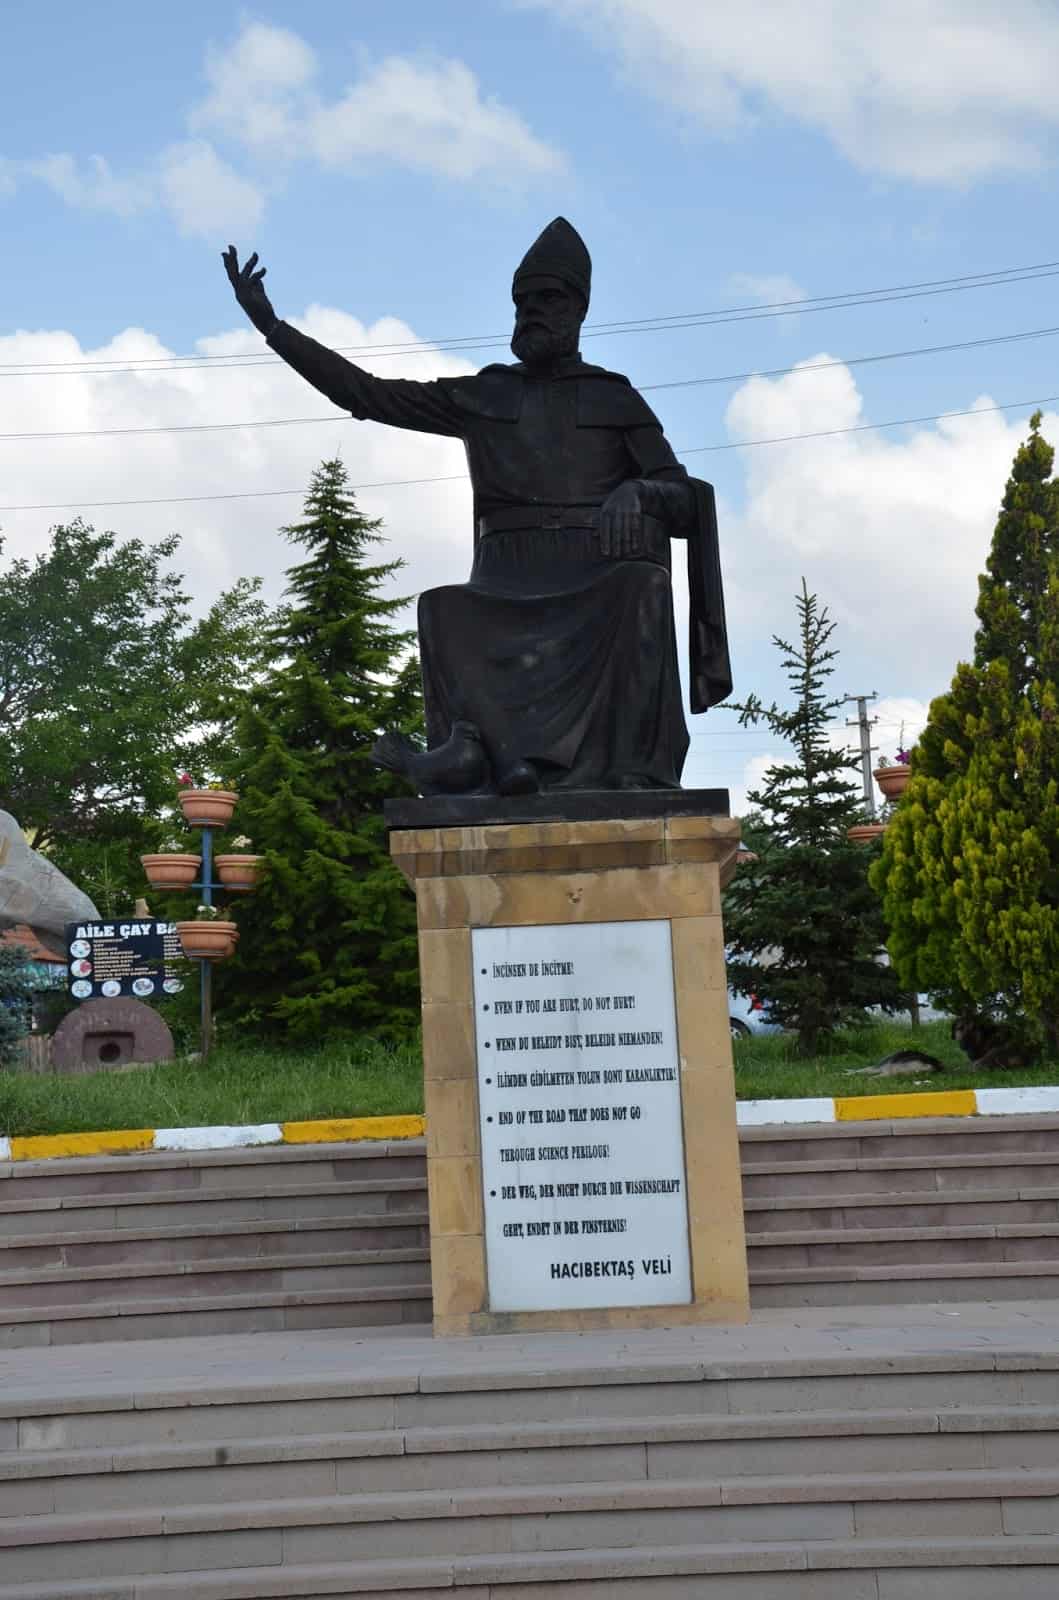 Hacıbektaş monument in Hacıbektaş, Turkey